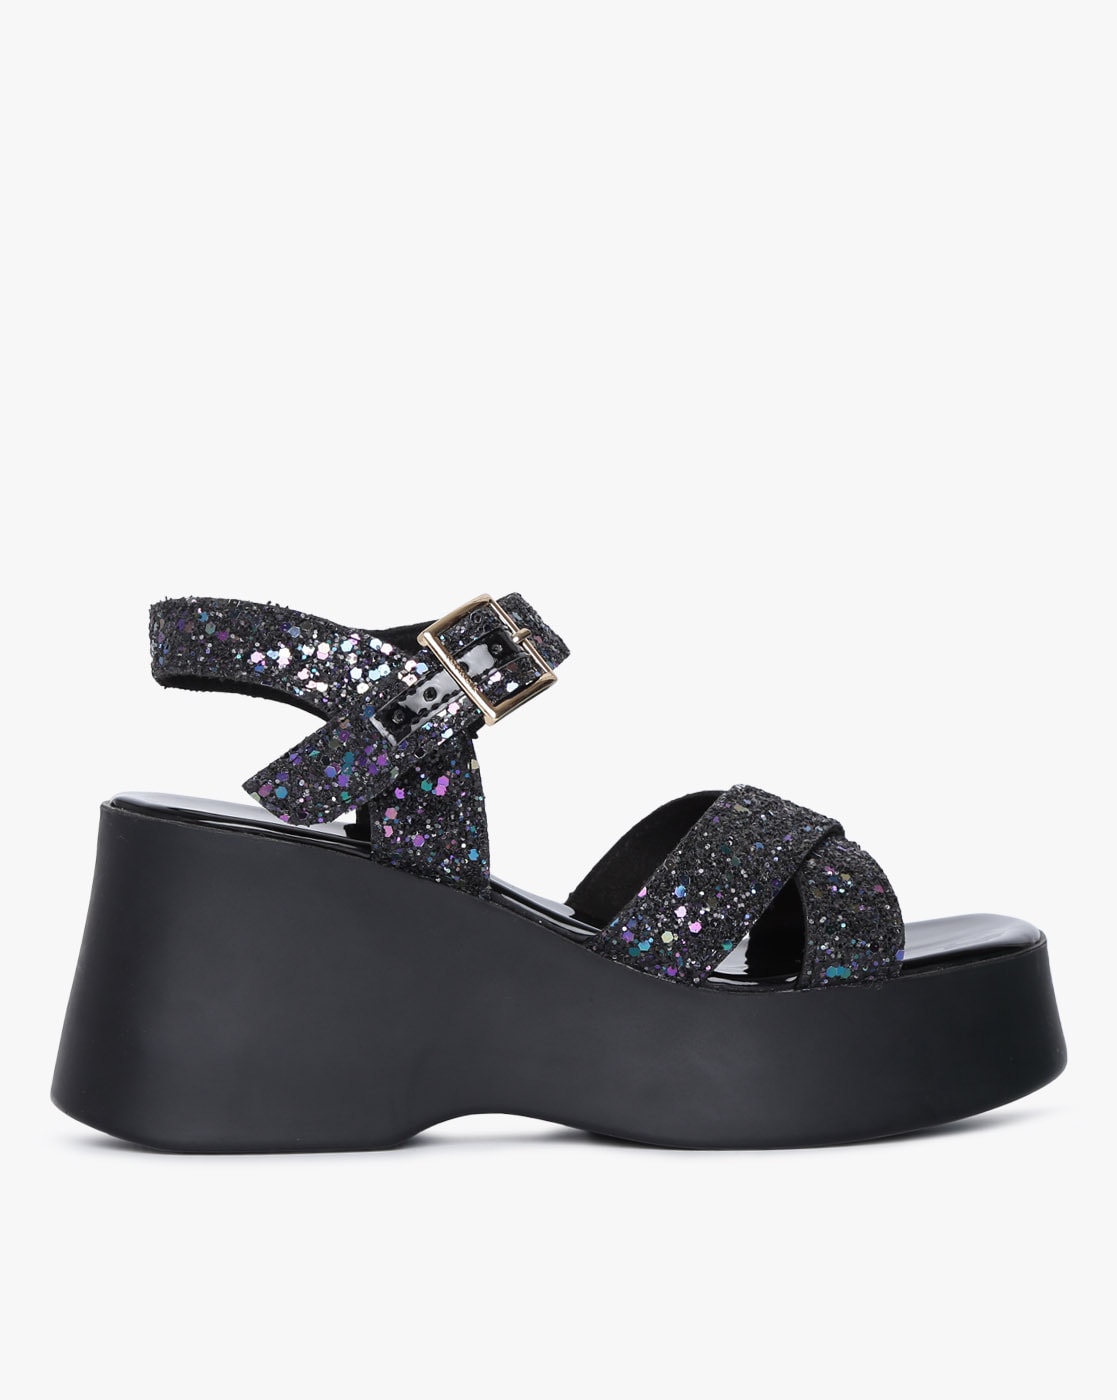 black strap platform heels